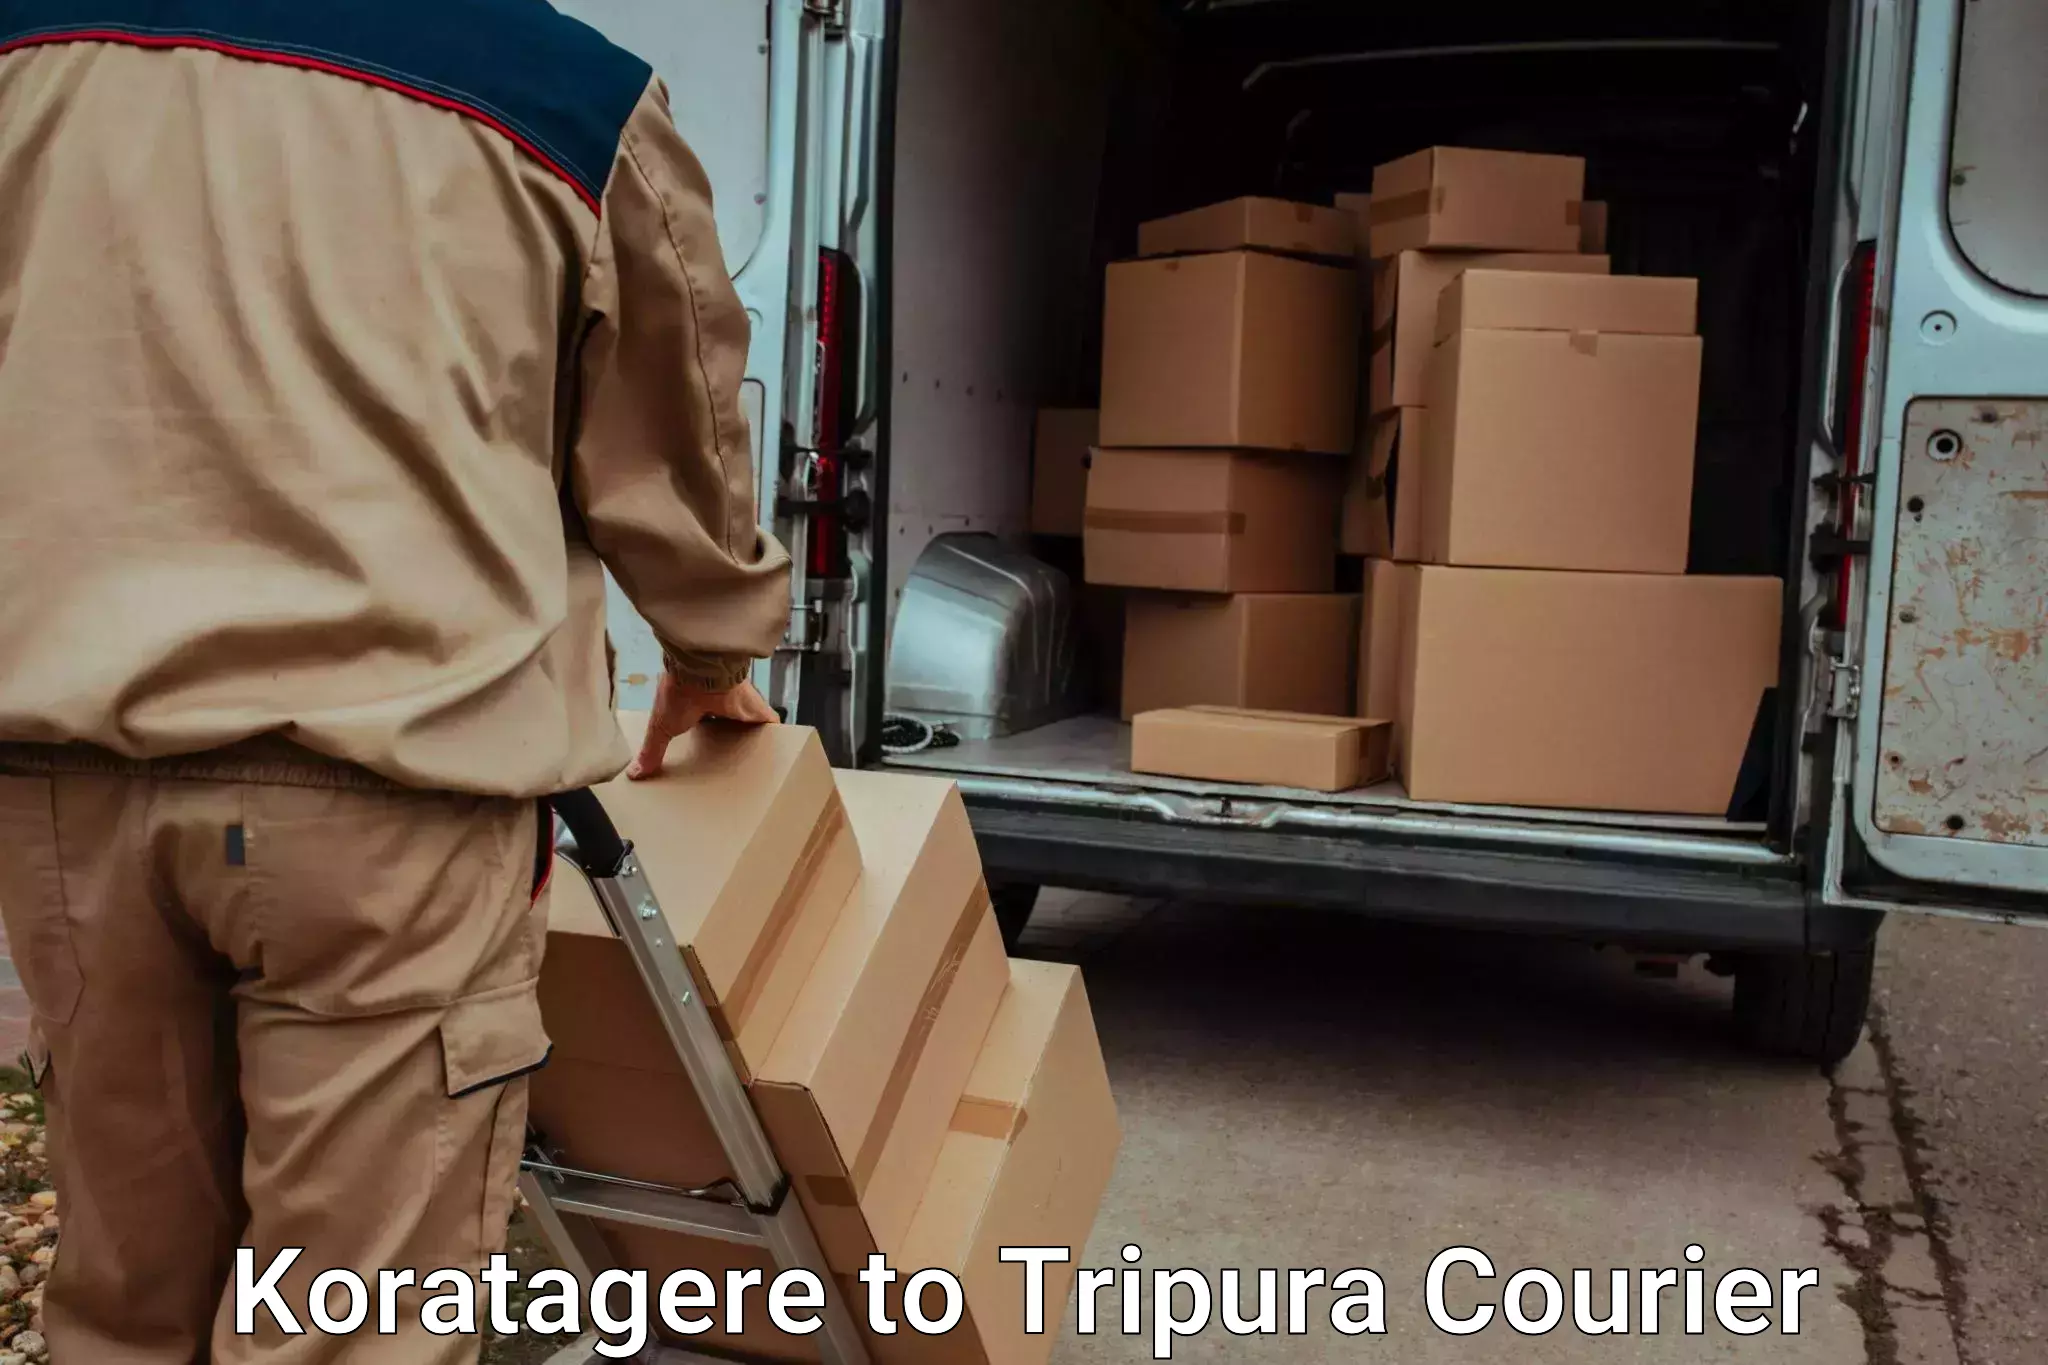 Luggage transport consultancy Koratagere to Tripura